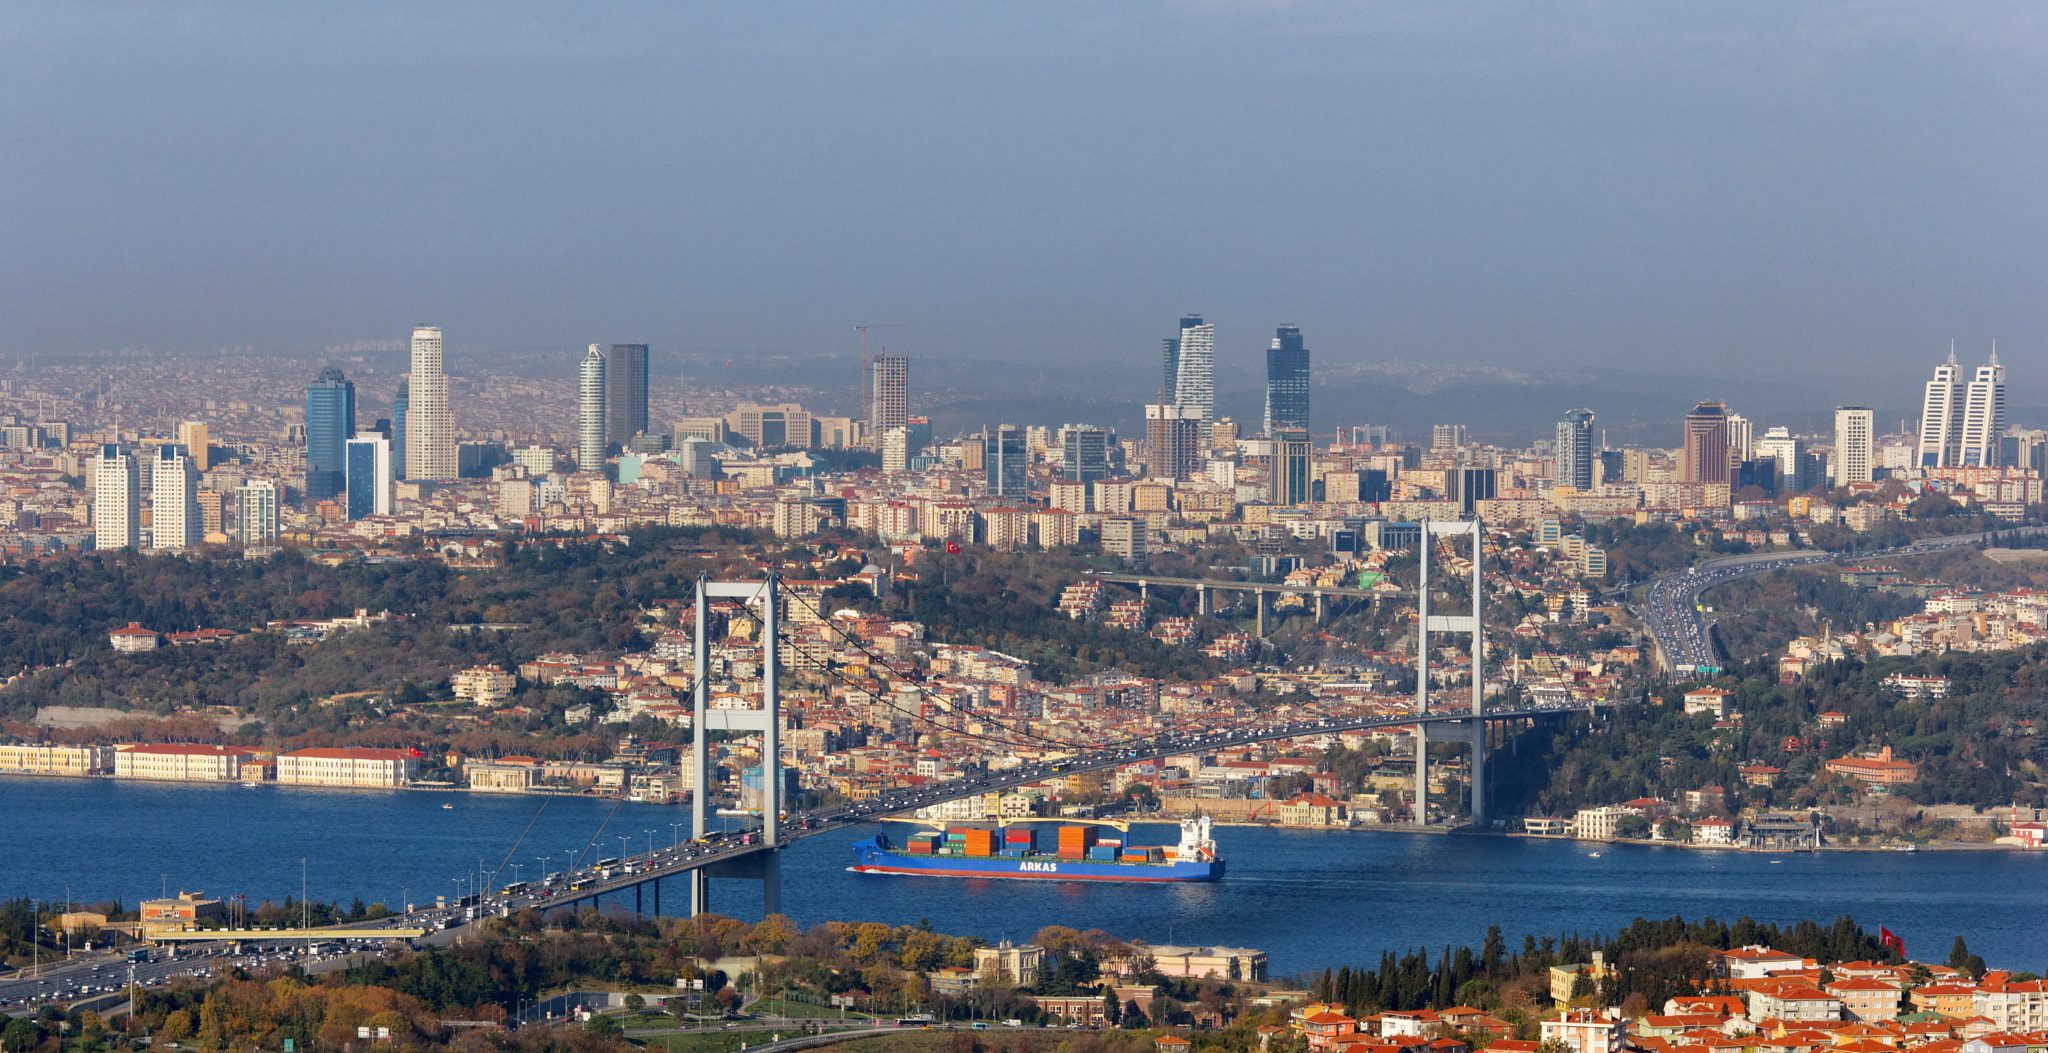 Istanbul to become global financial hub, Erdoğan says